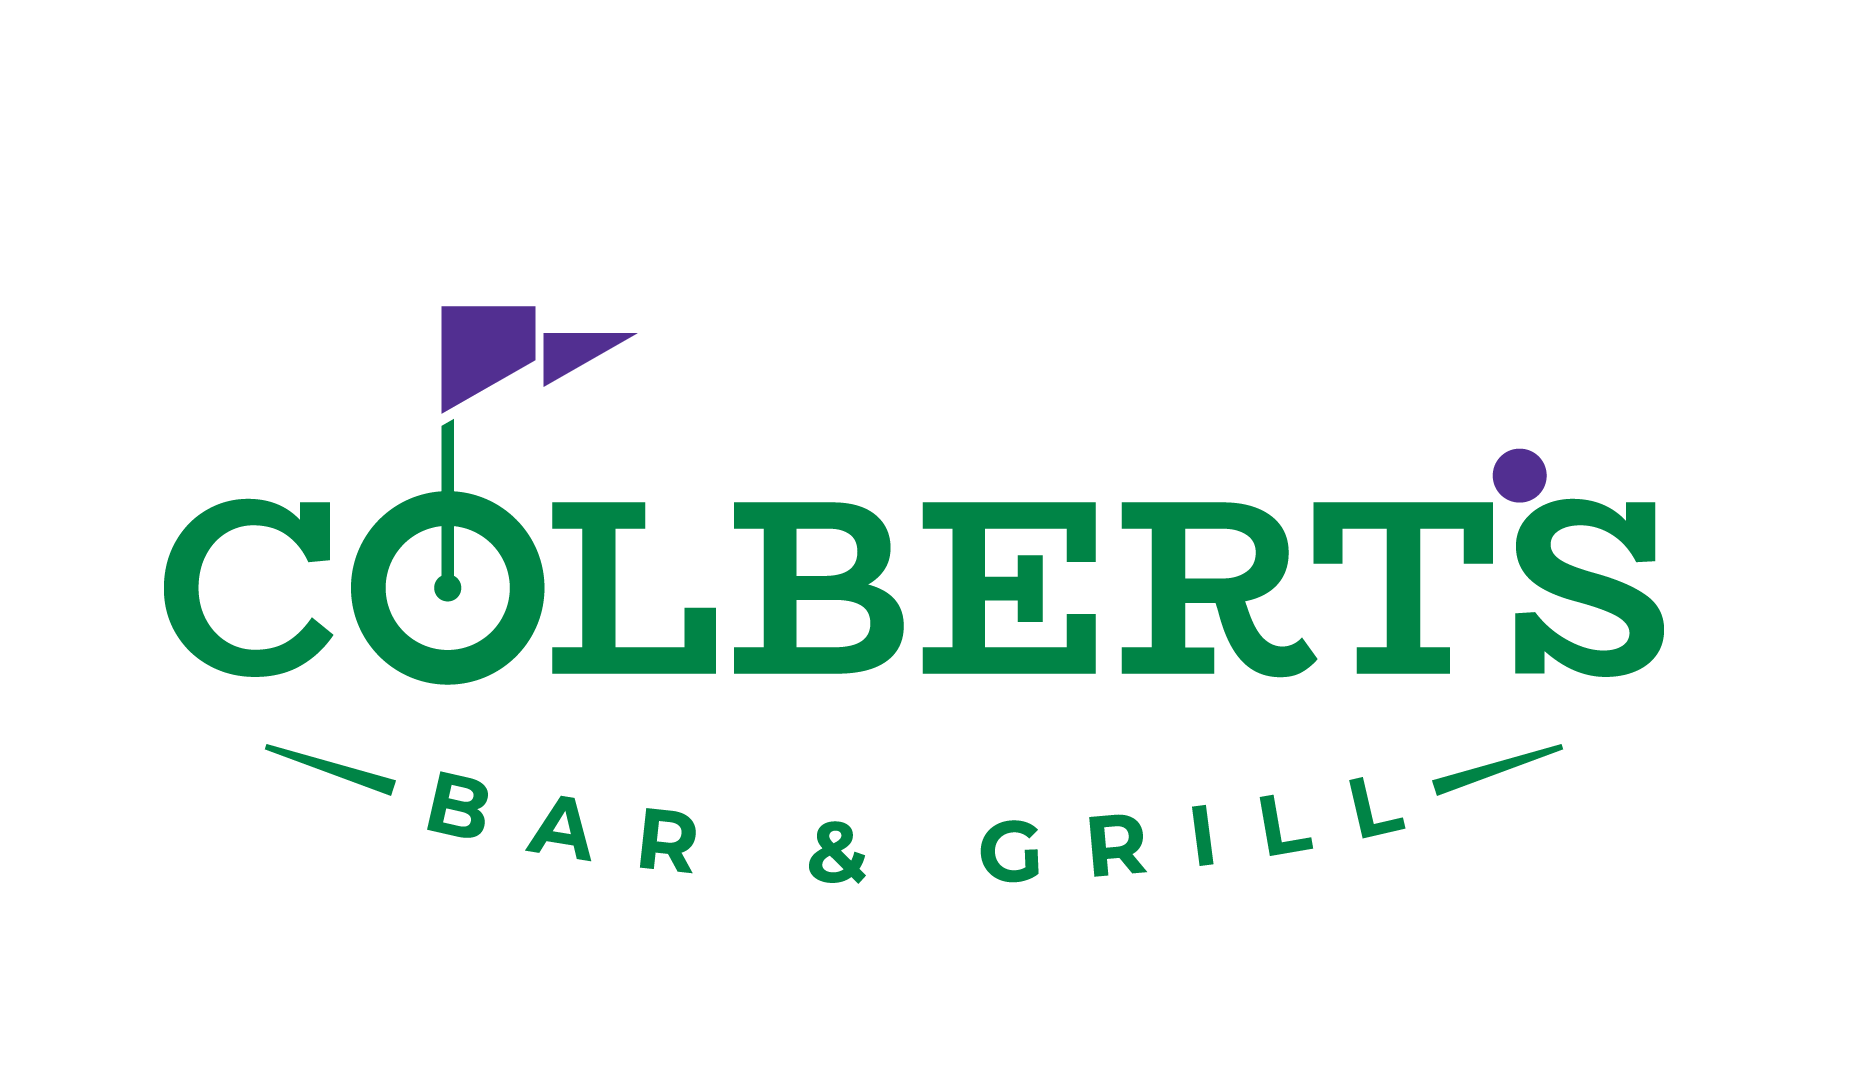 Coberts-logo final_Colbert Main Logo.png